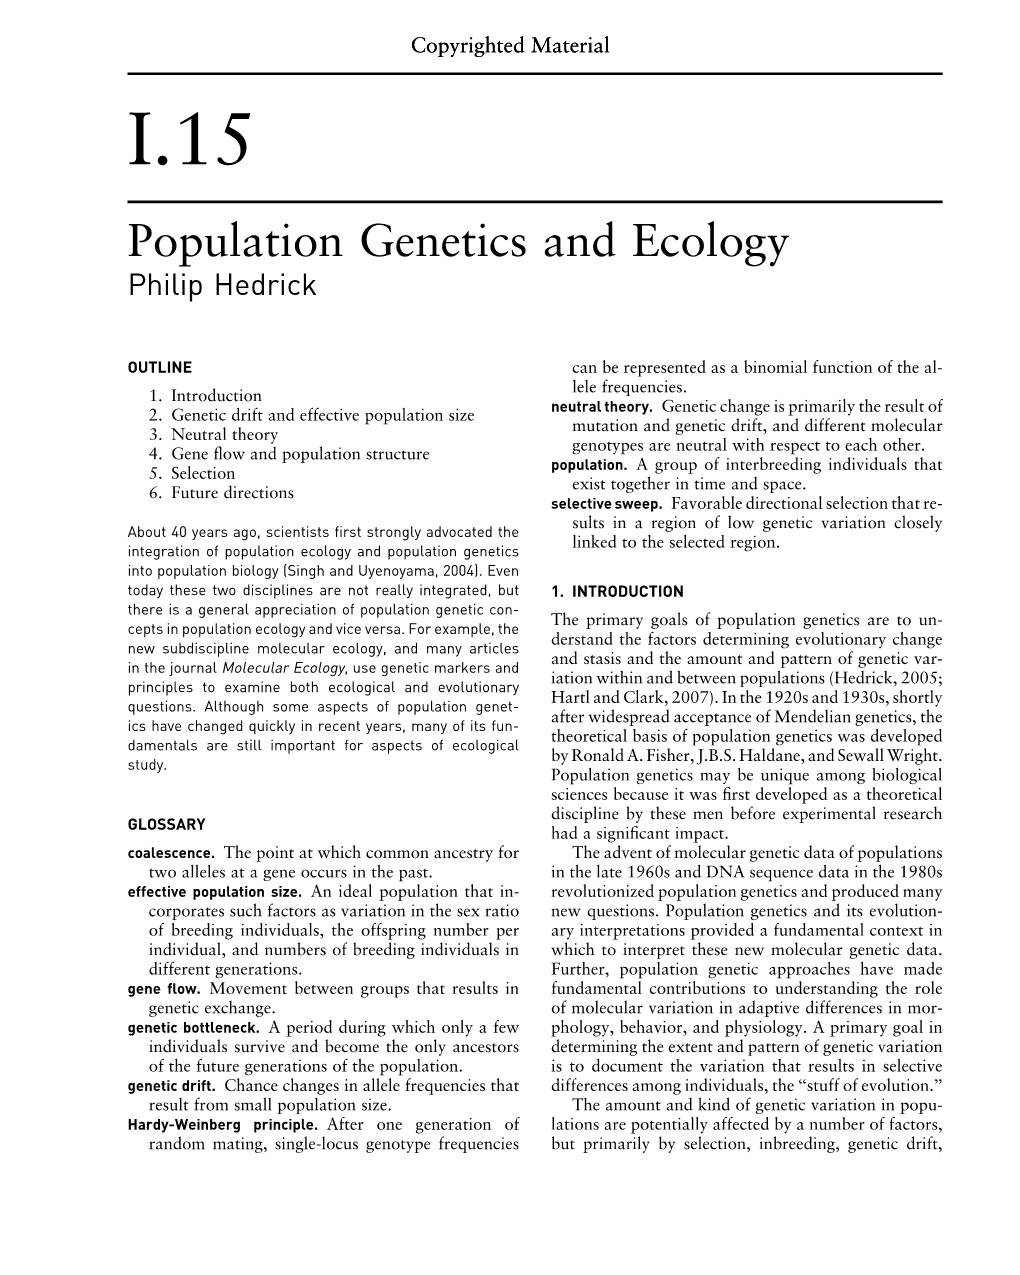 Population Genetics and Ecology Philip Hedrick